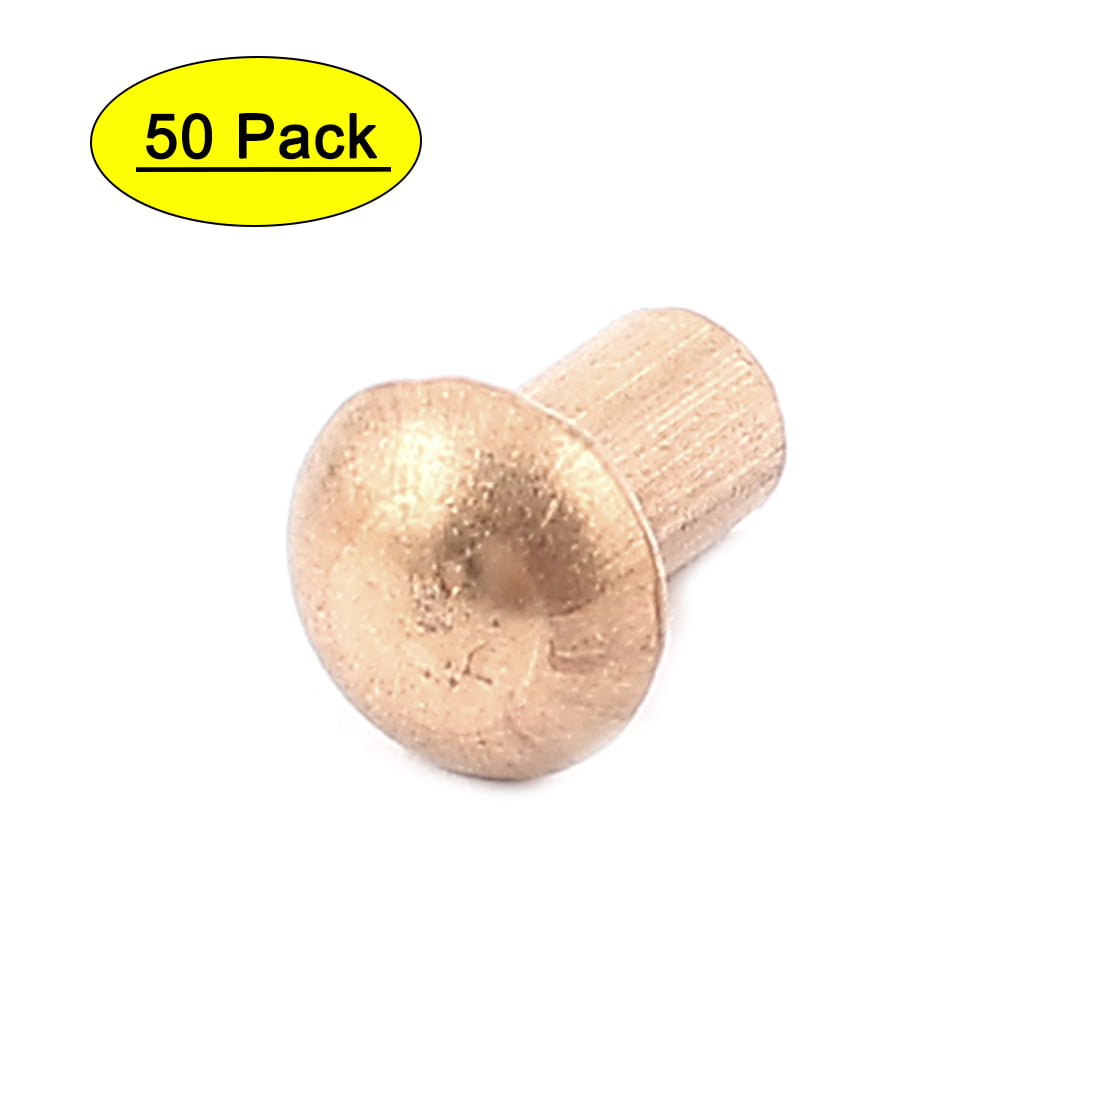 50 Pcs 3/16" Diameter 5/16" L Shank Round Head Copper Solid Rivets Fasteners